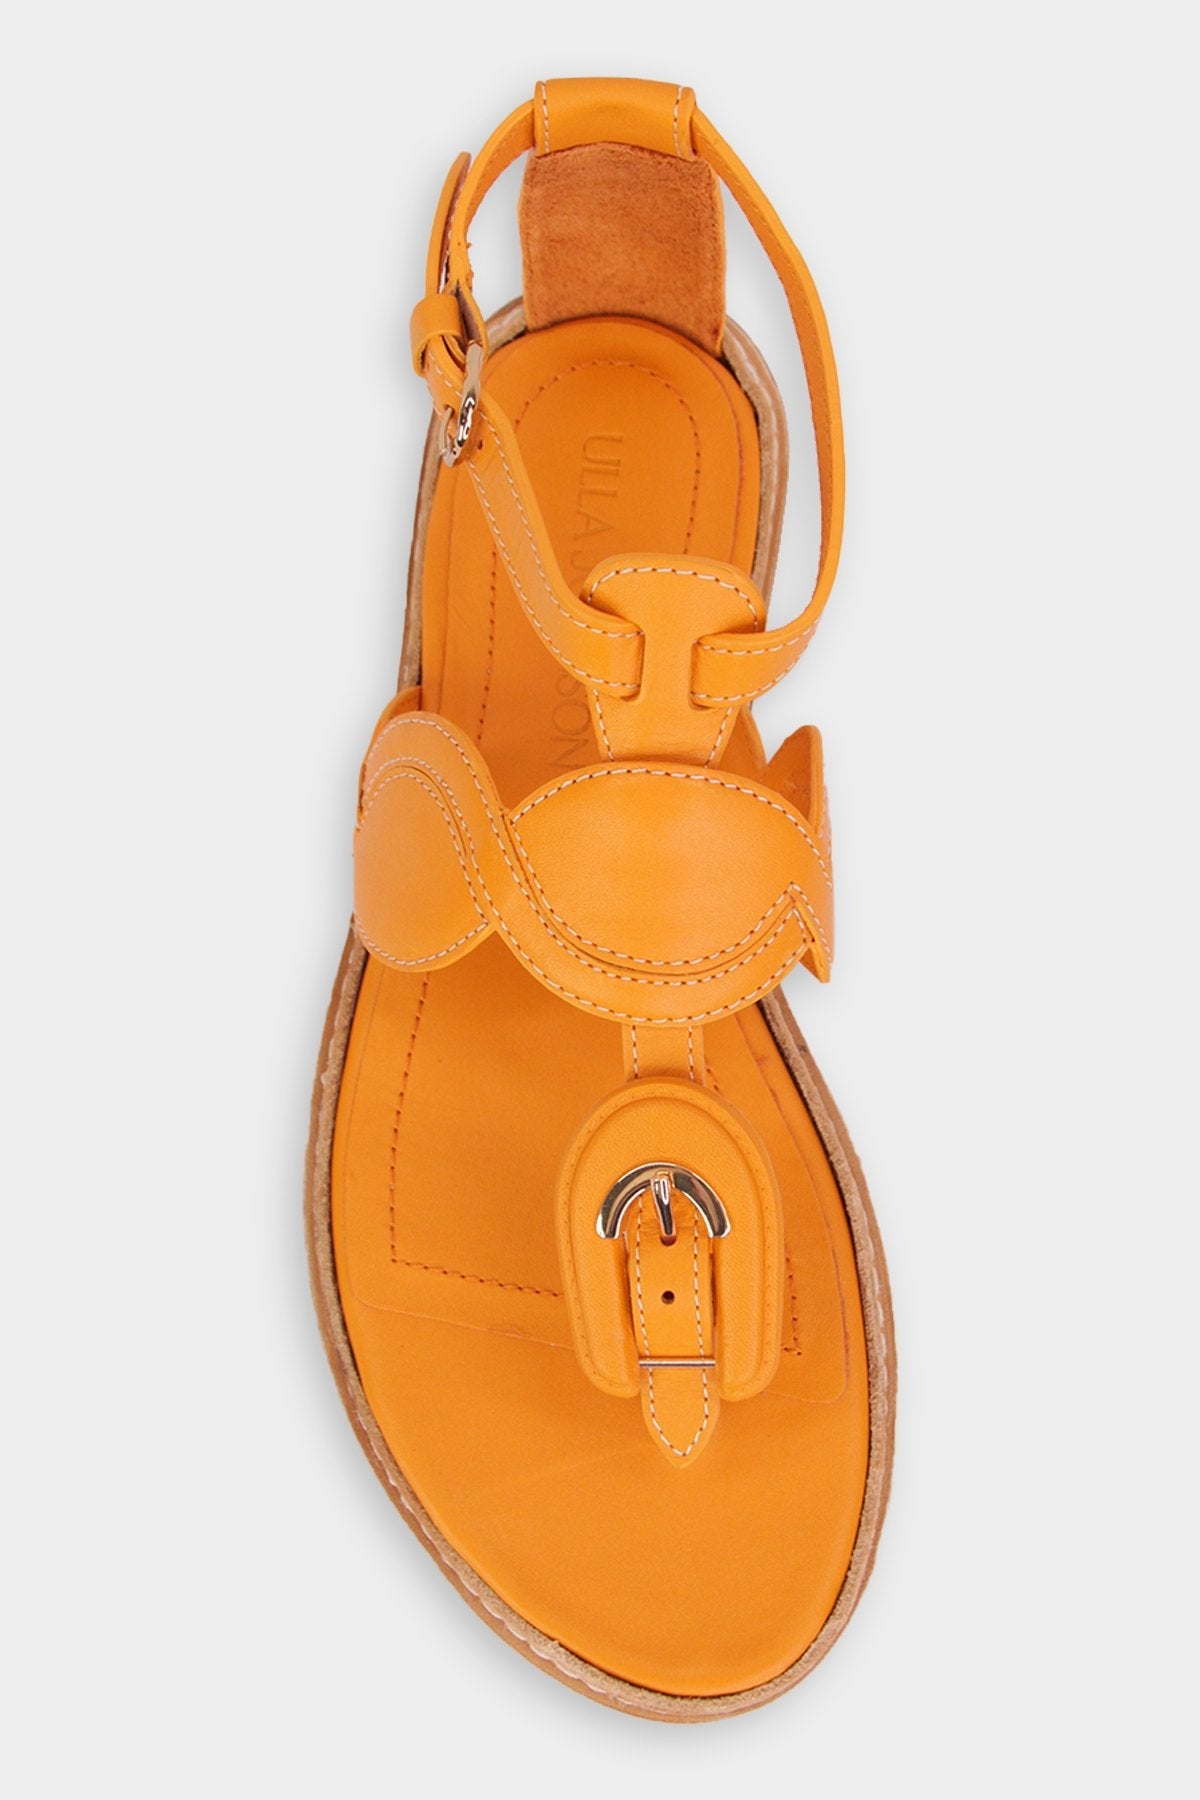 Arabella Braided Leather Sandal in Marigold - shop-olivia.com